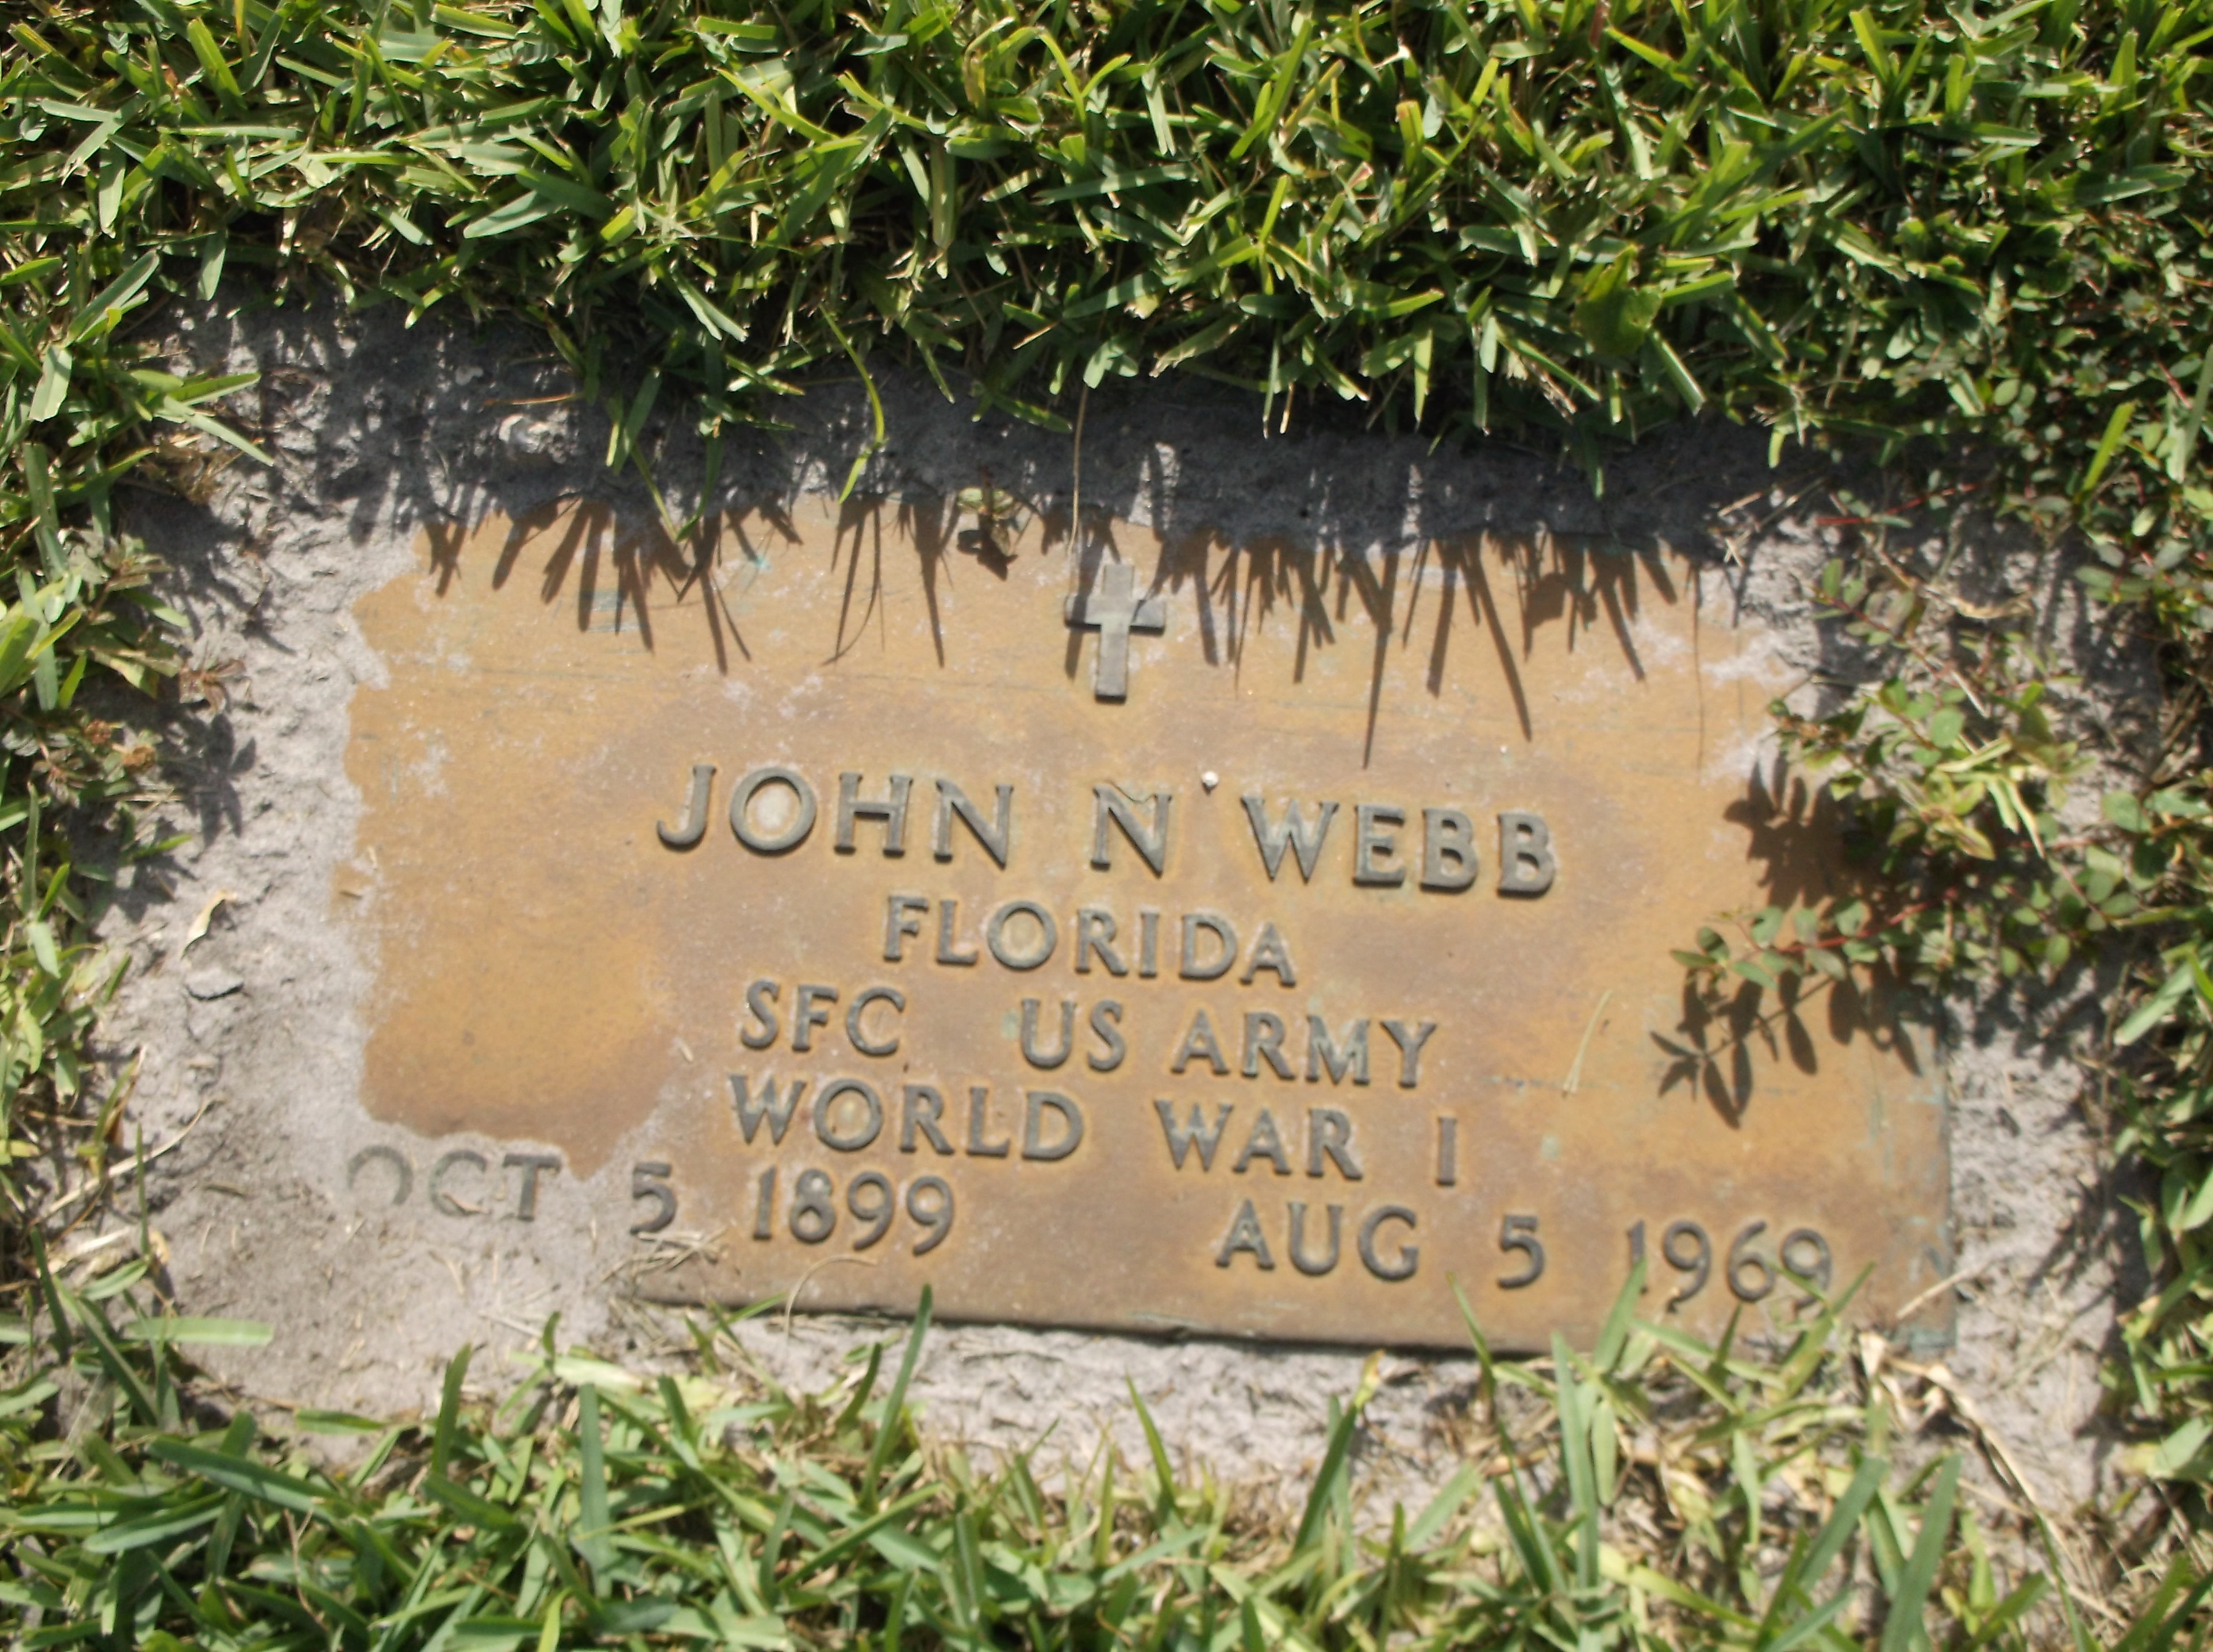 John N Webb